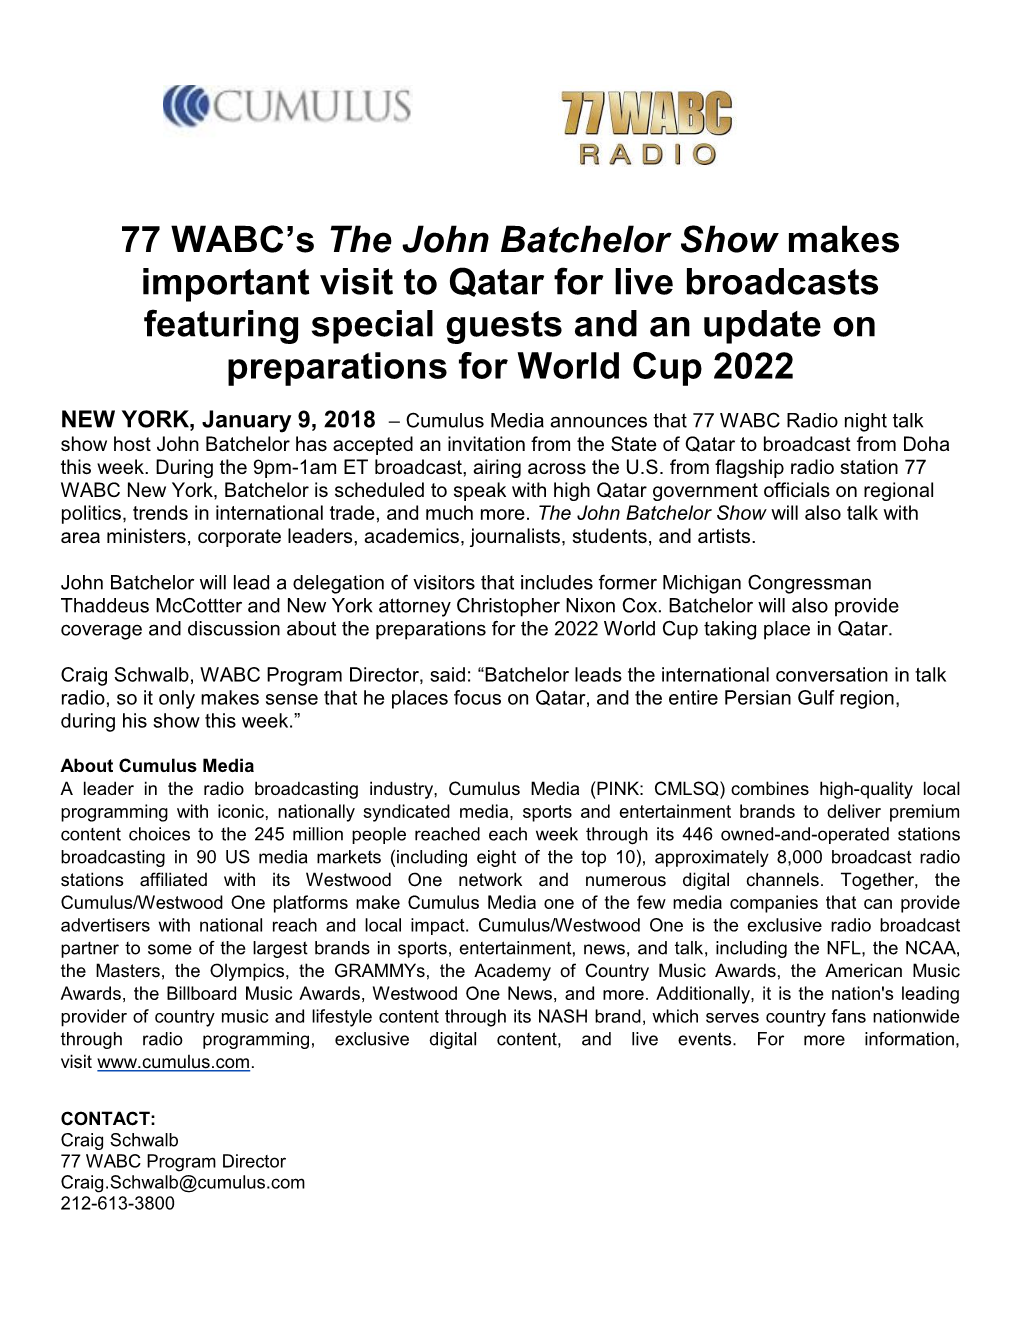 77 WABC's the John Batchelor Show Makes Important